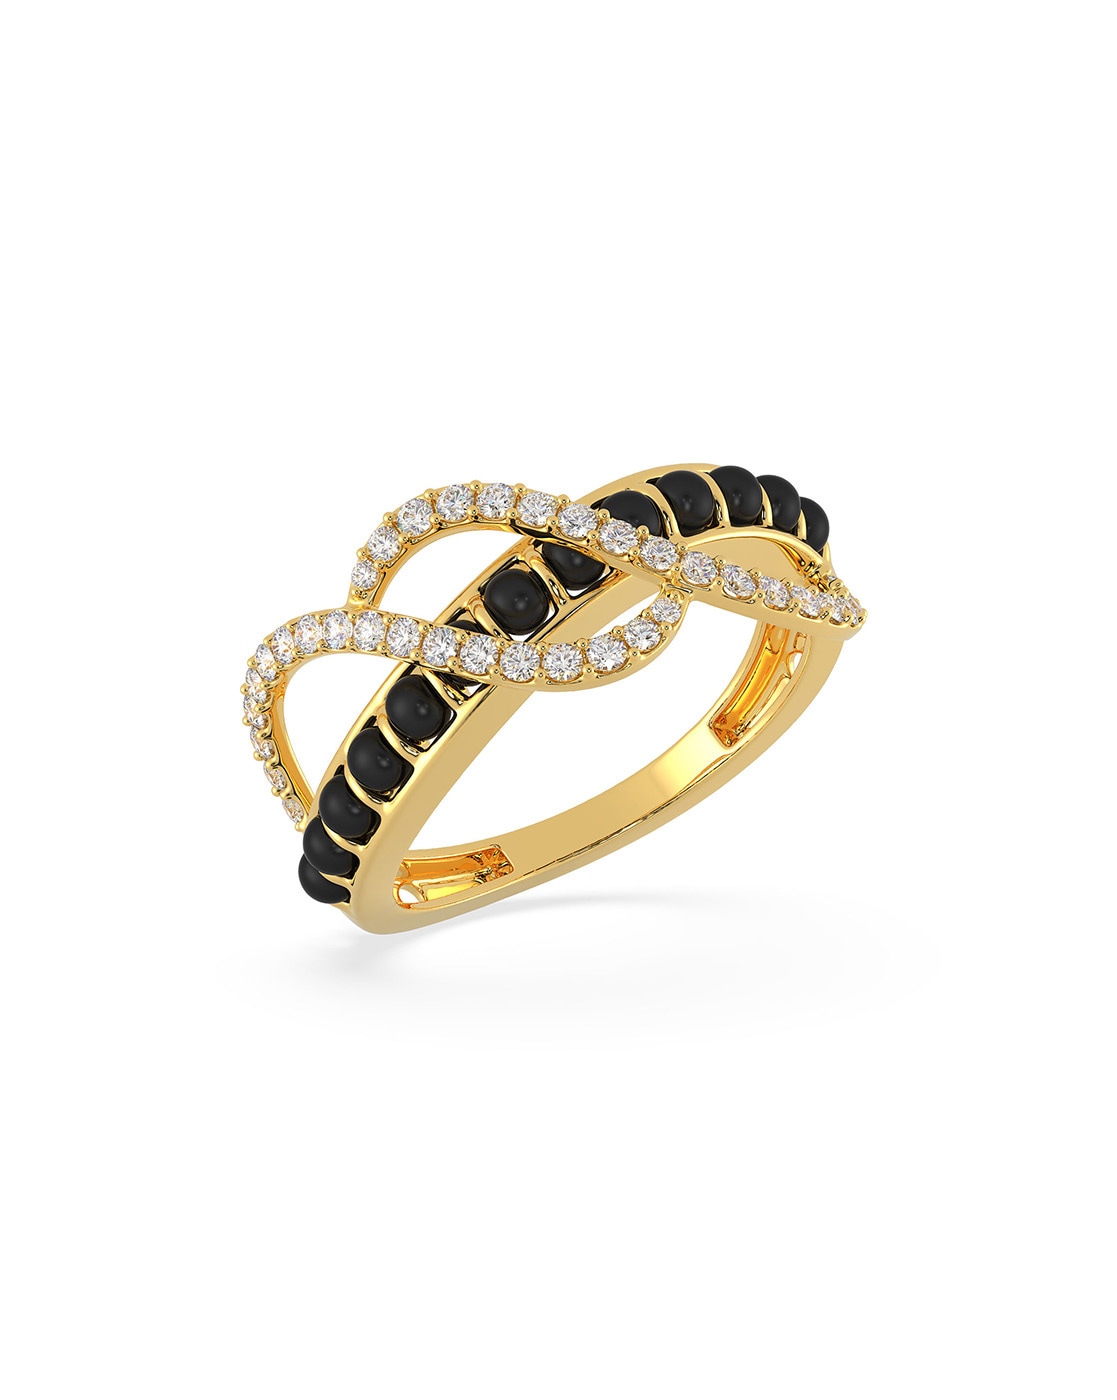 Buy Malabar Gold Ring RG0794160 for Women Online | Malabar Gold & Diamonds